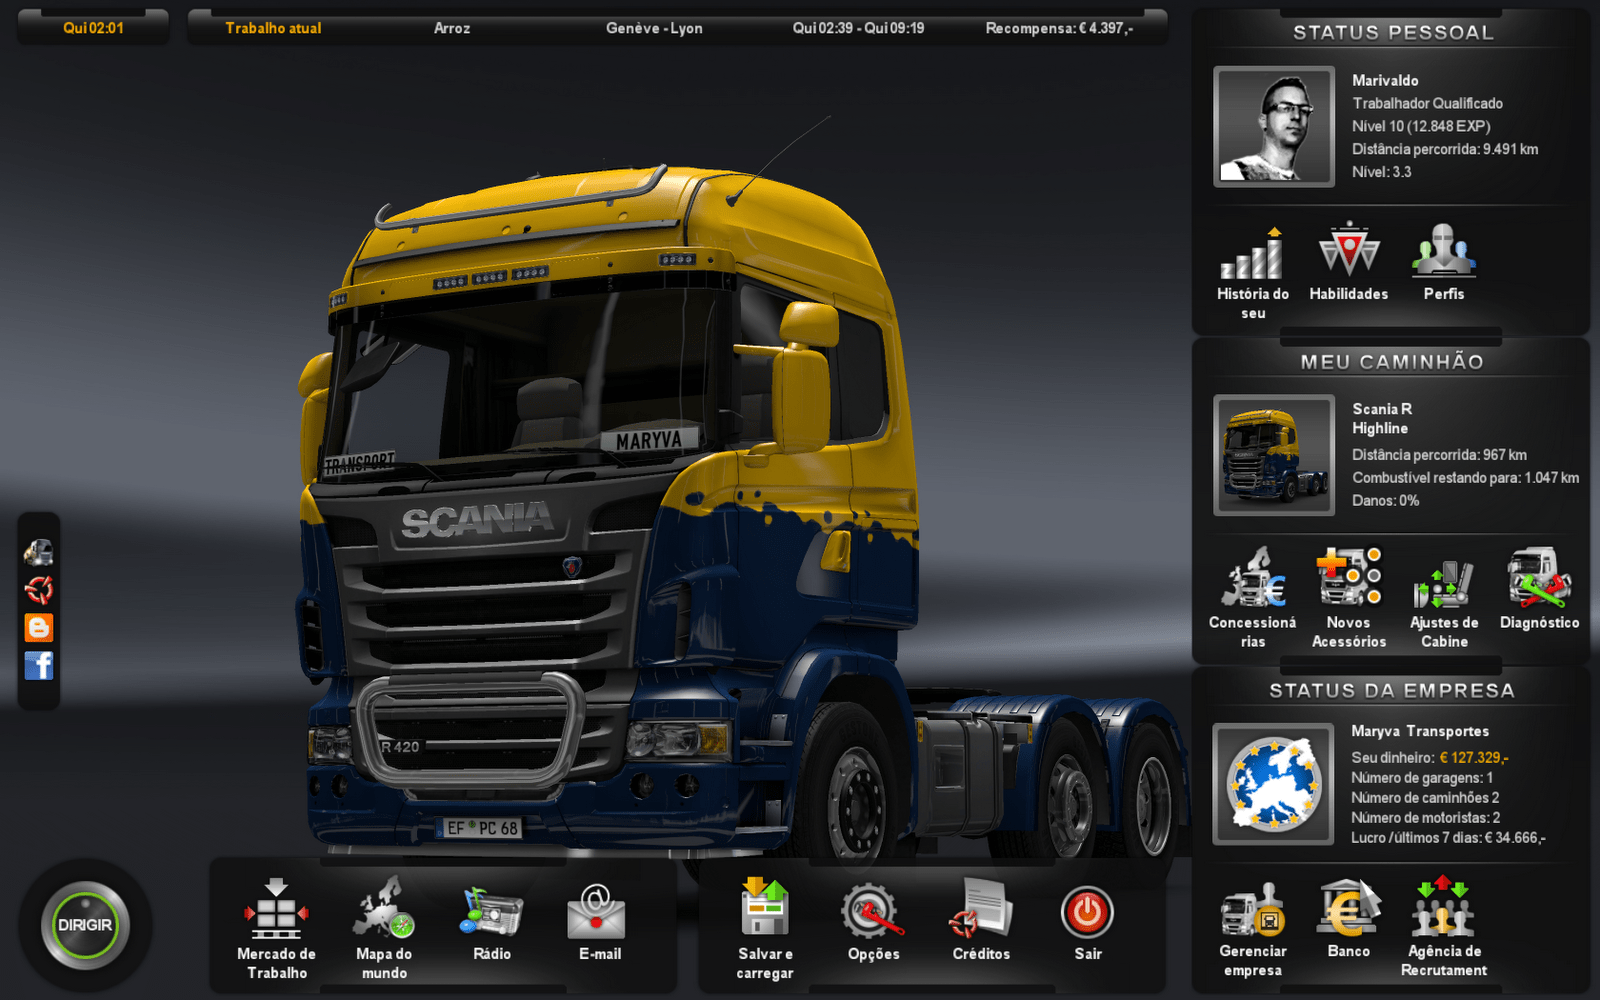 Free full version of euro truck simulator game